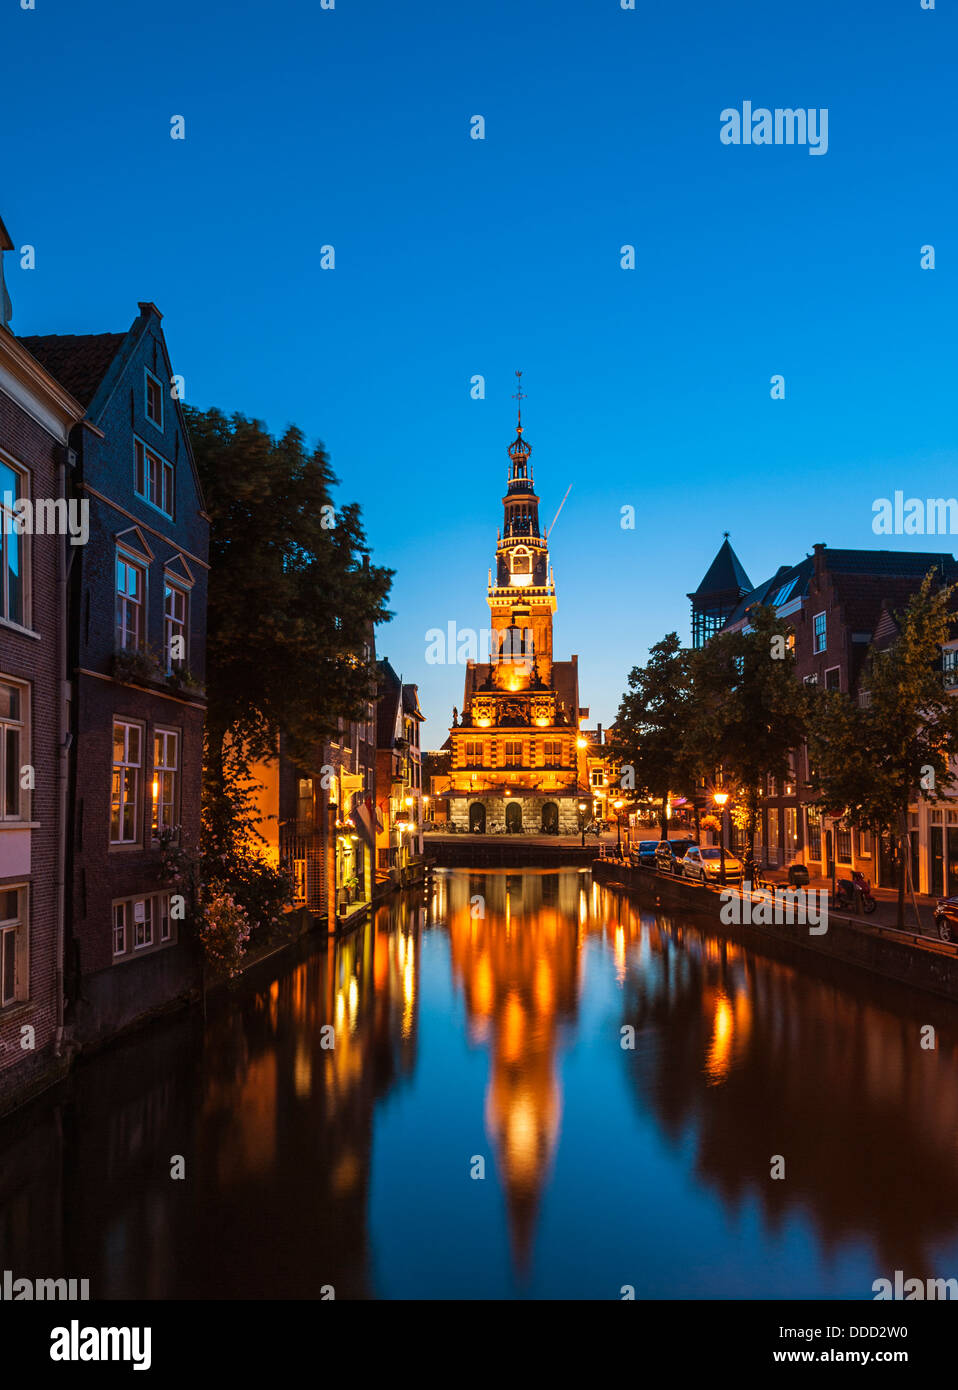 Canal in Alkmaar Netherlands at dusk Stock Photo